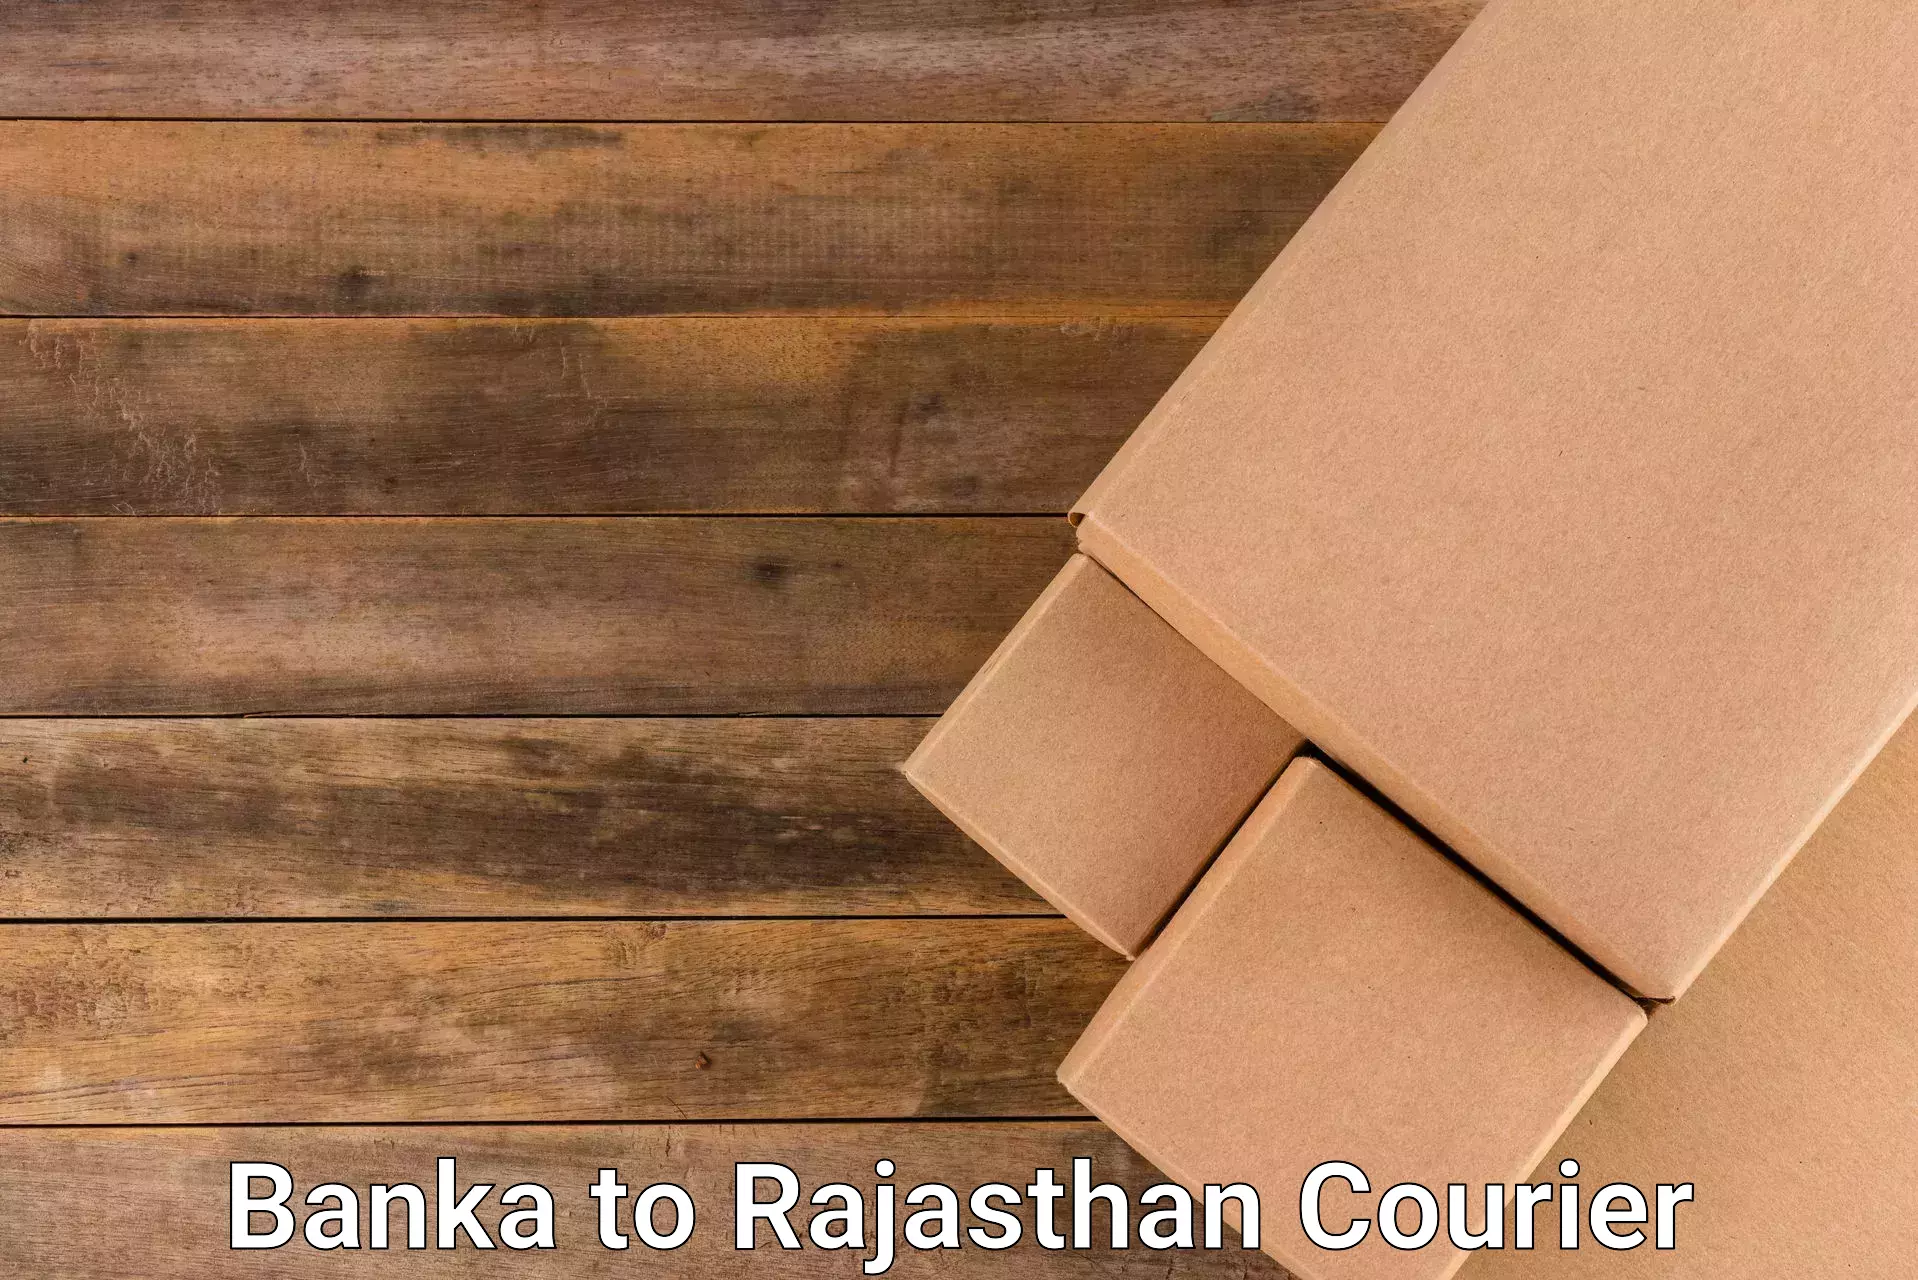 Efficient shipping platforms Banka to Rajasthan